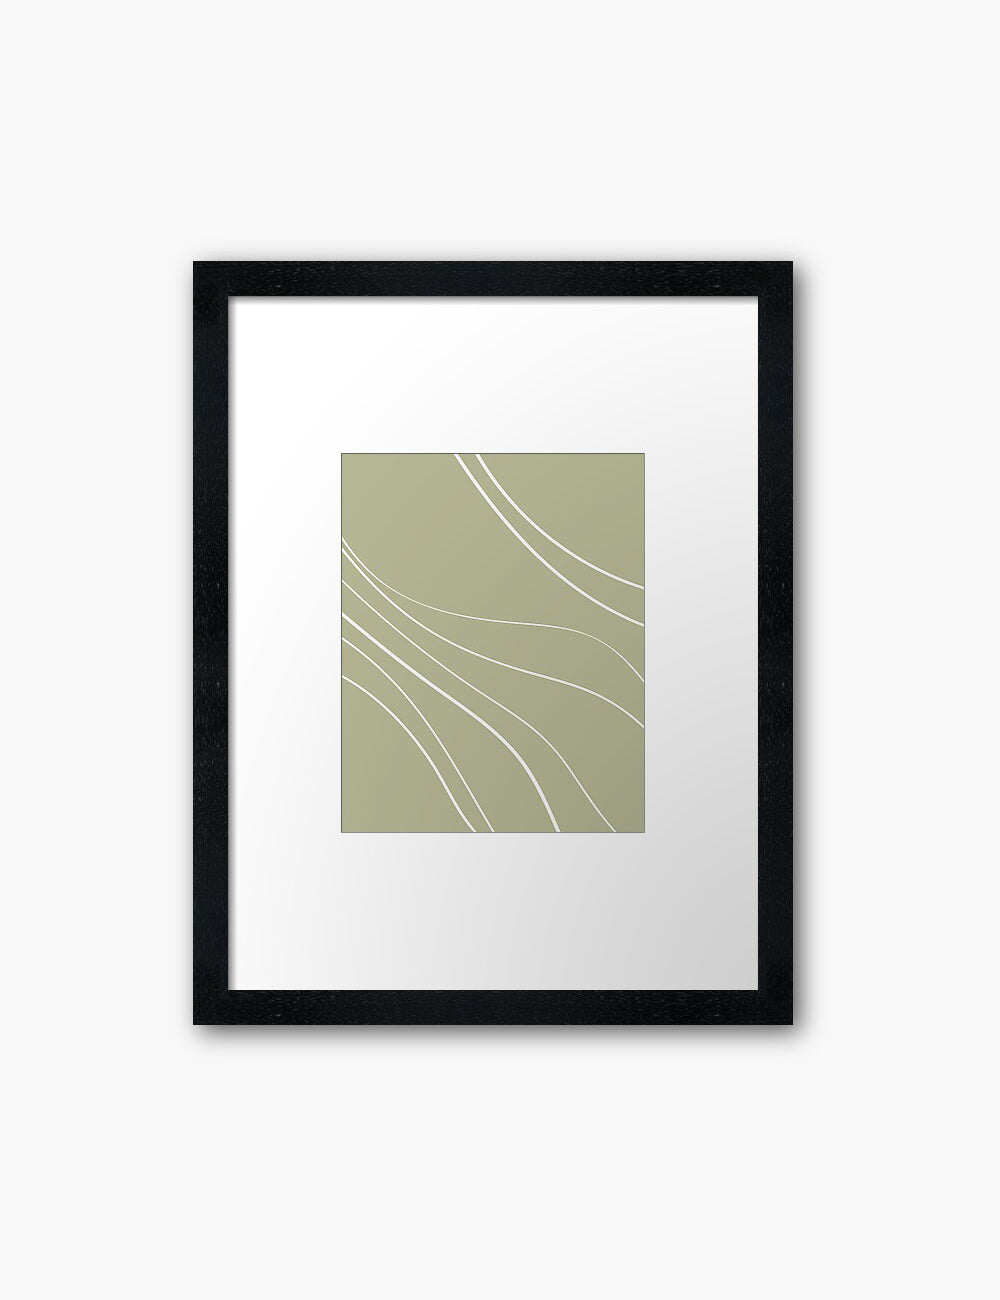 MINIMAL LINE ART. Abstract Waves. Boho. Green. Printable Wall Art Illustration. - PAPER MOON Art & Design